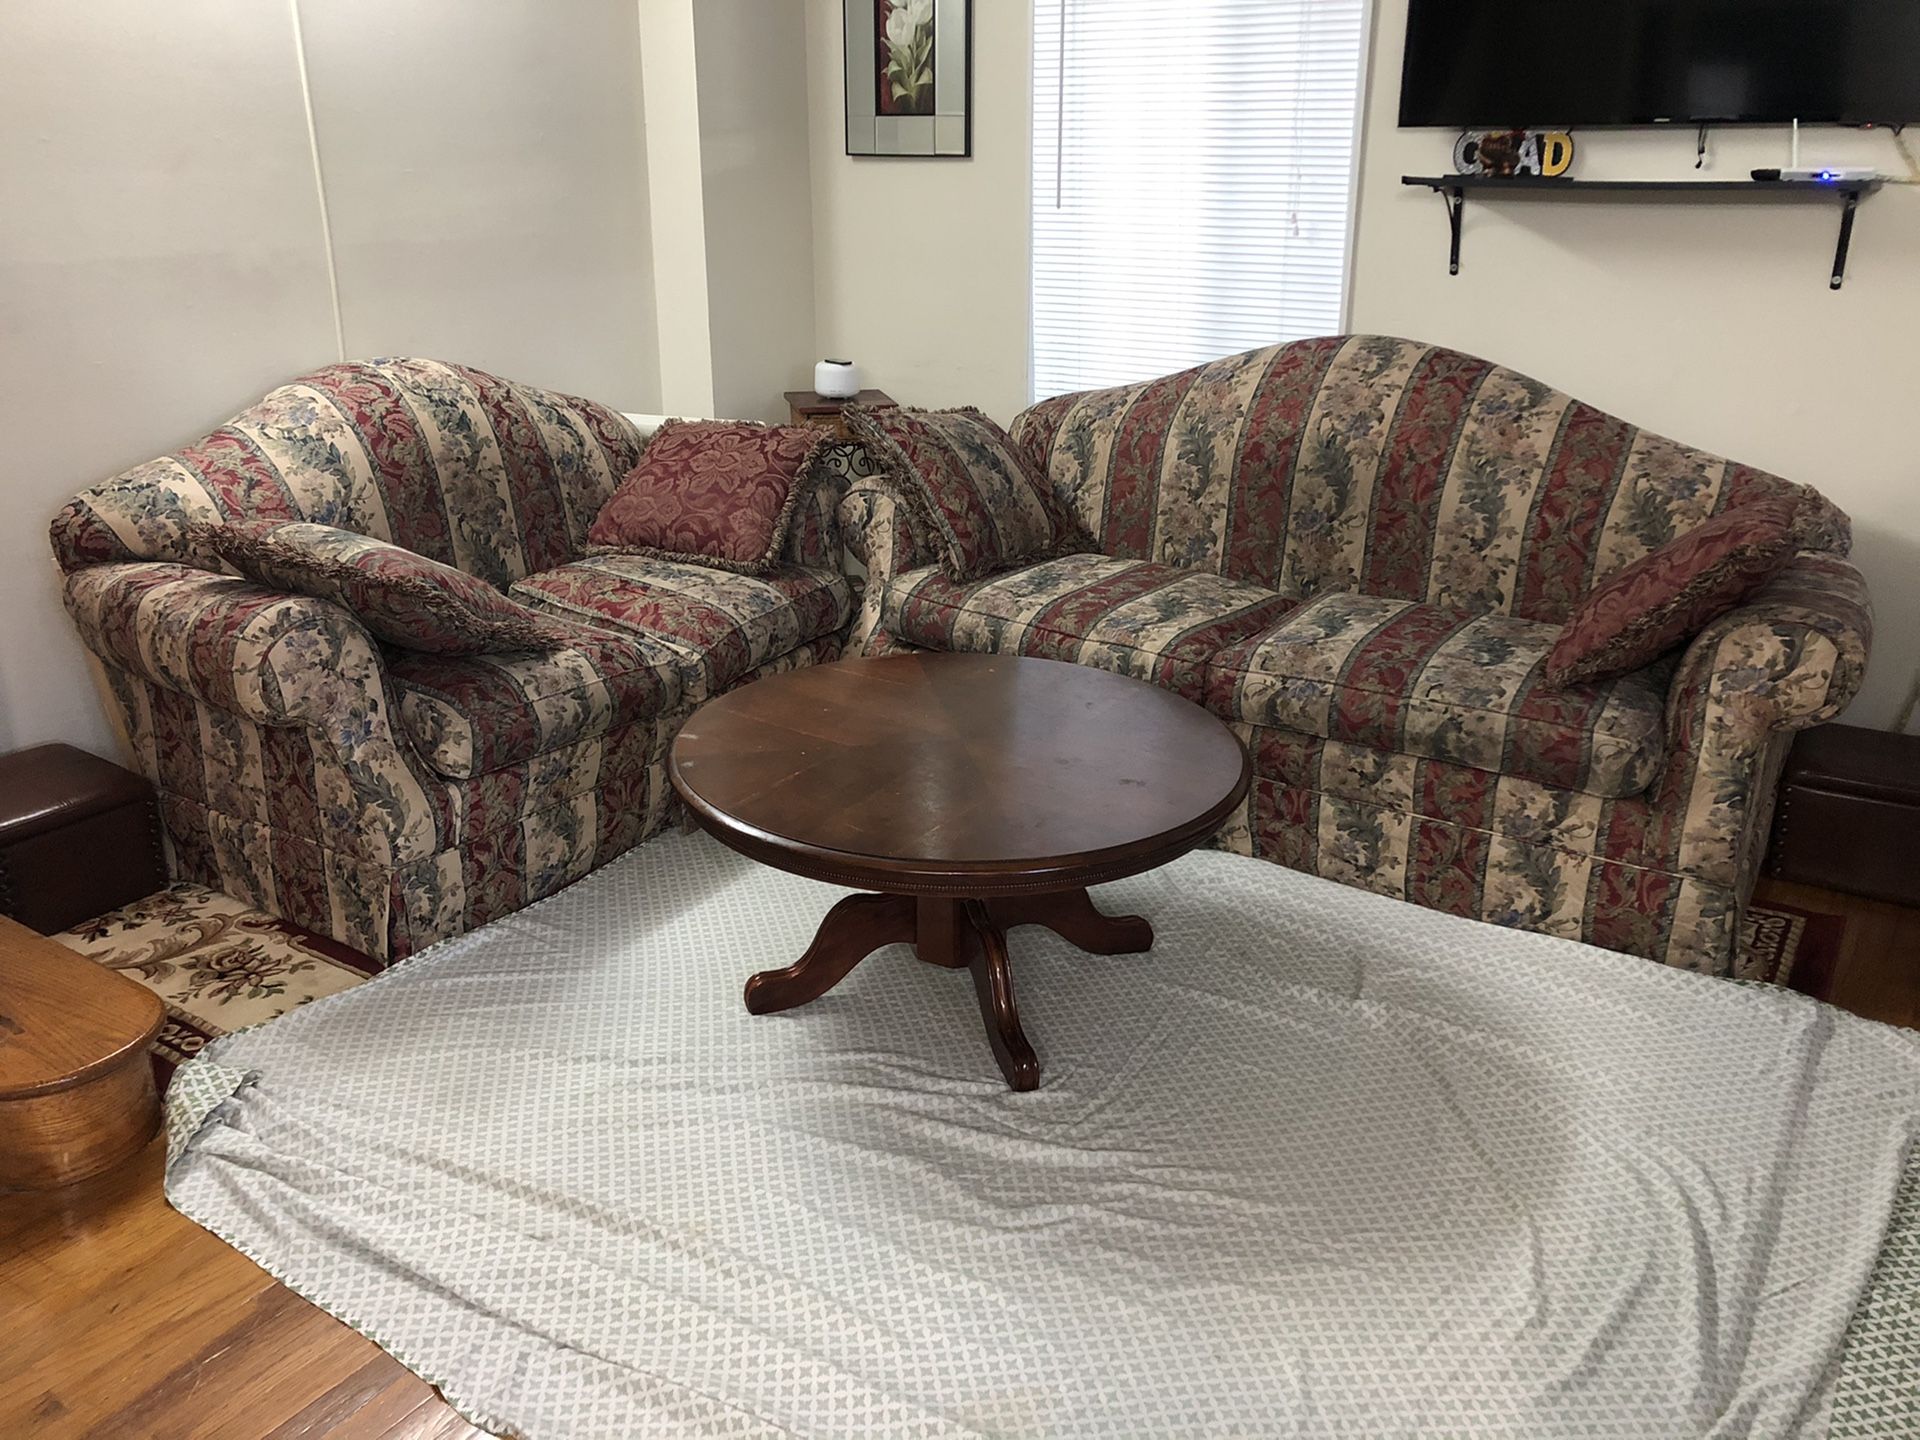 Sofa set with wood table